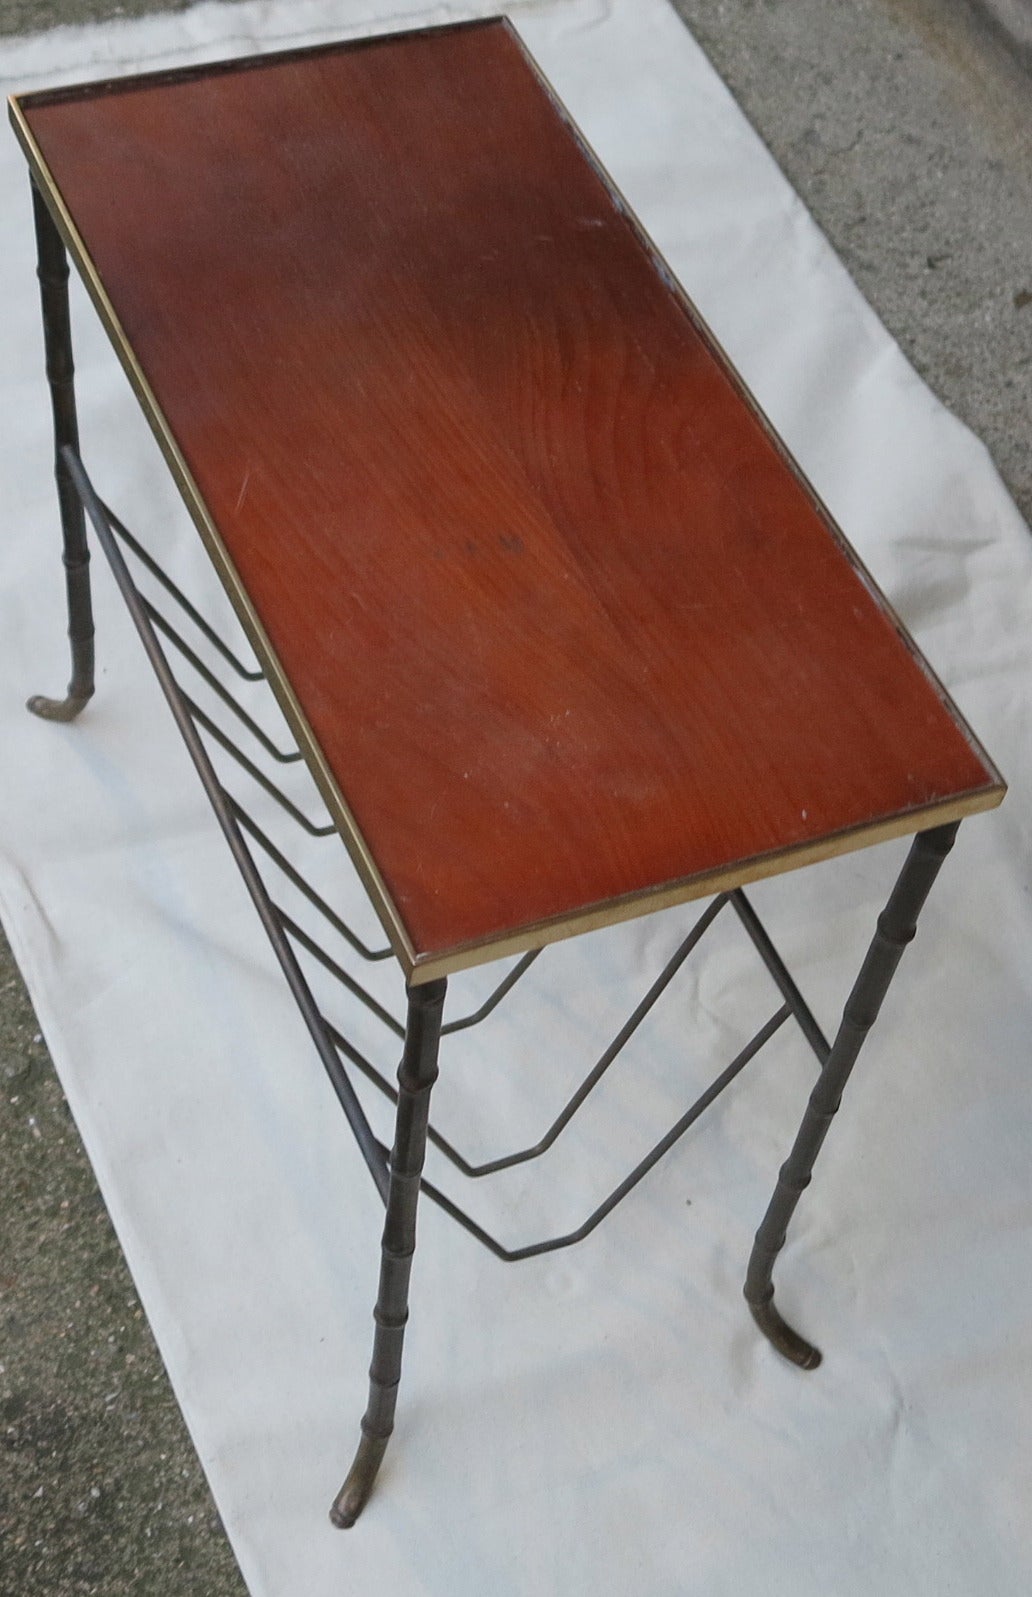 Magazine rack in polished brass, model Bamboo, Mahogany tray
good condition circa 1950-1970